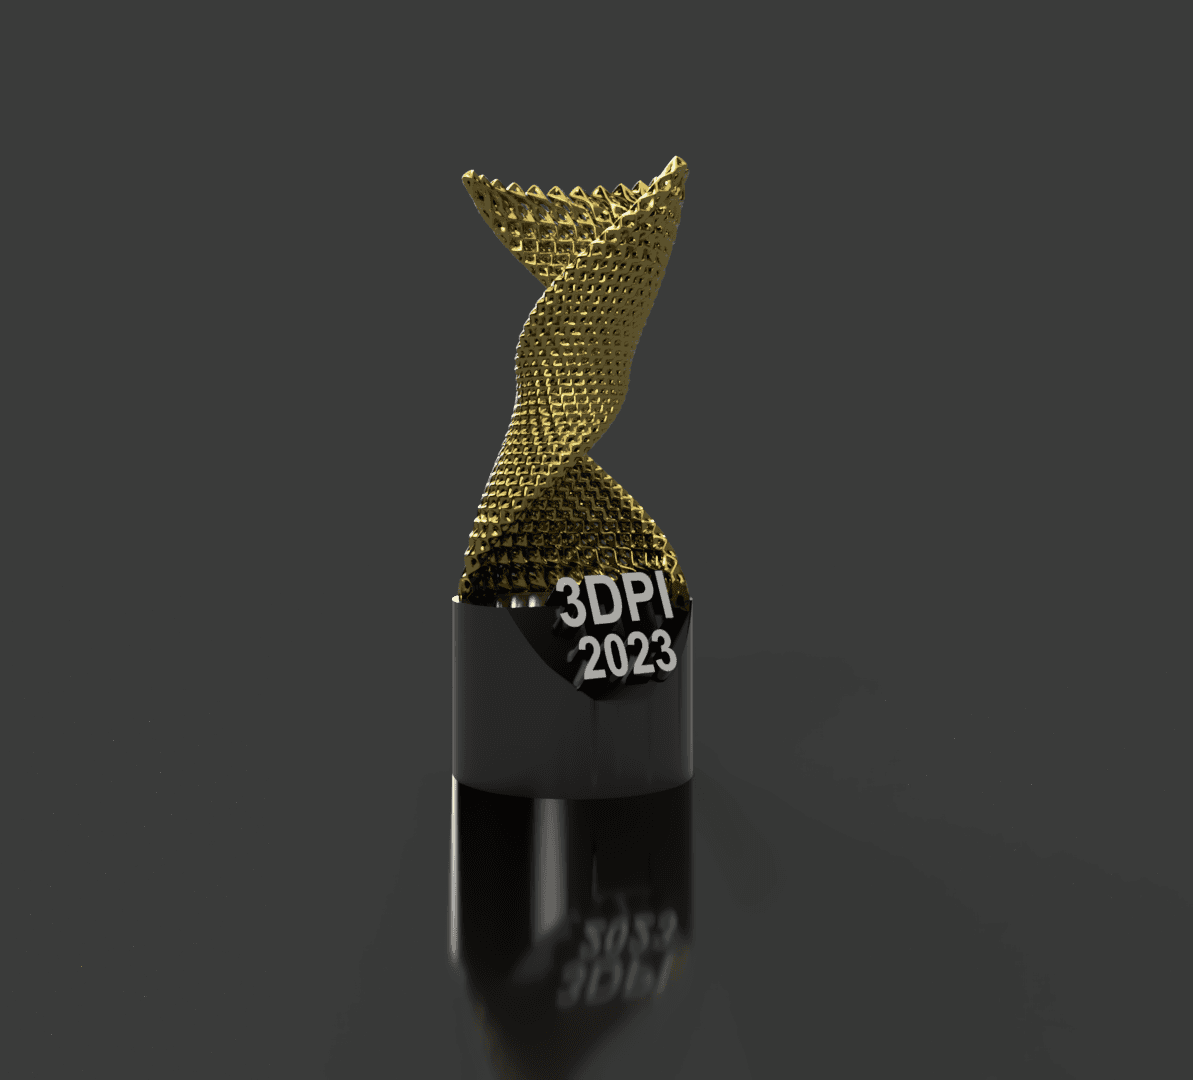  3DPI AWARDS TROPY SUBMISSION 2023 3d model